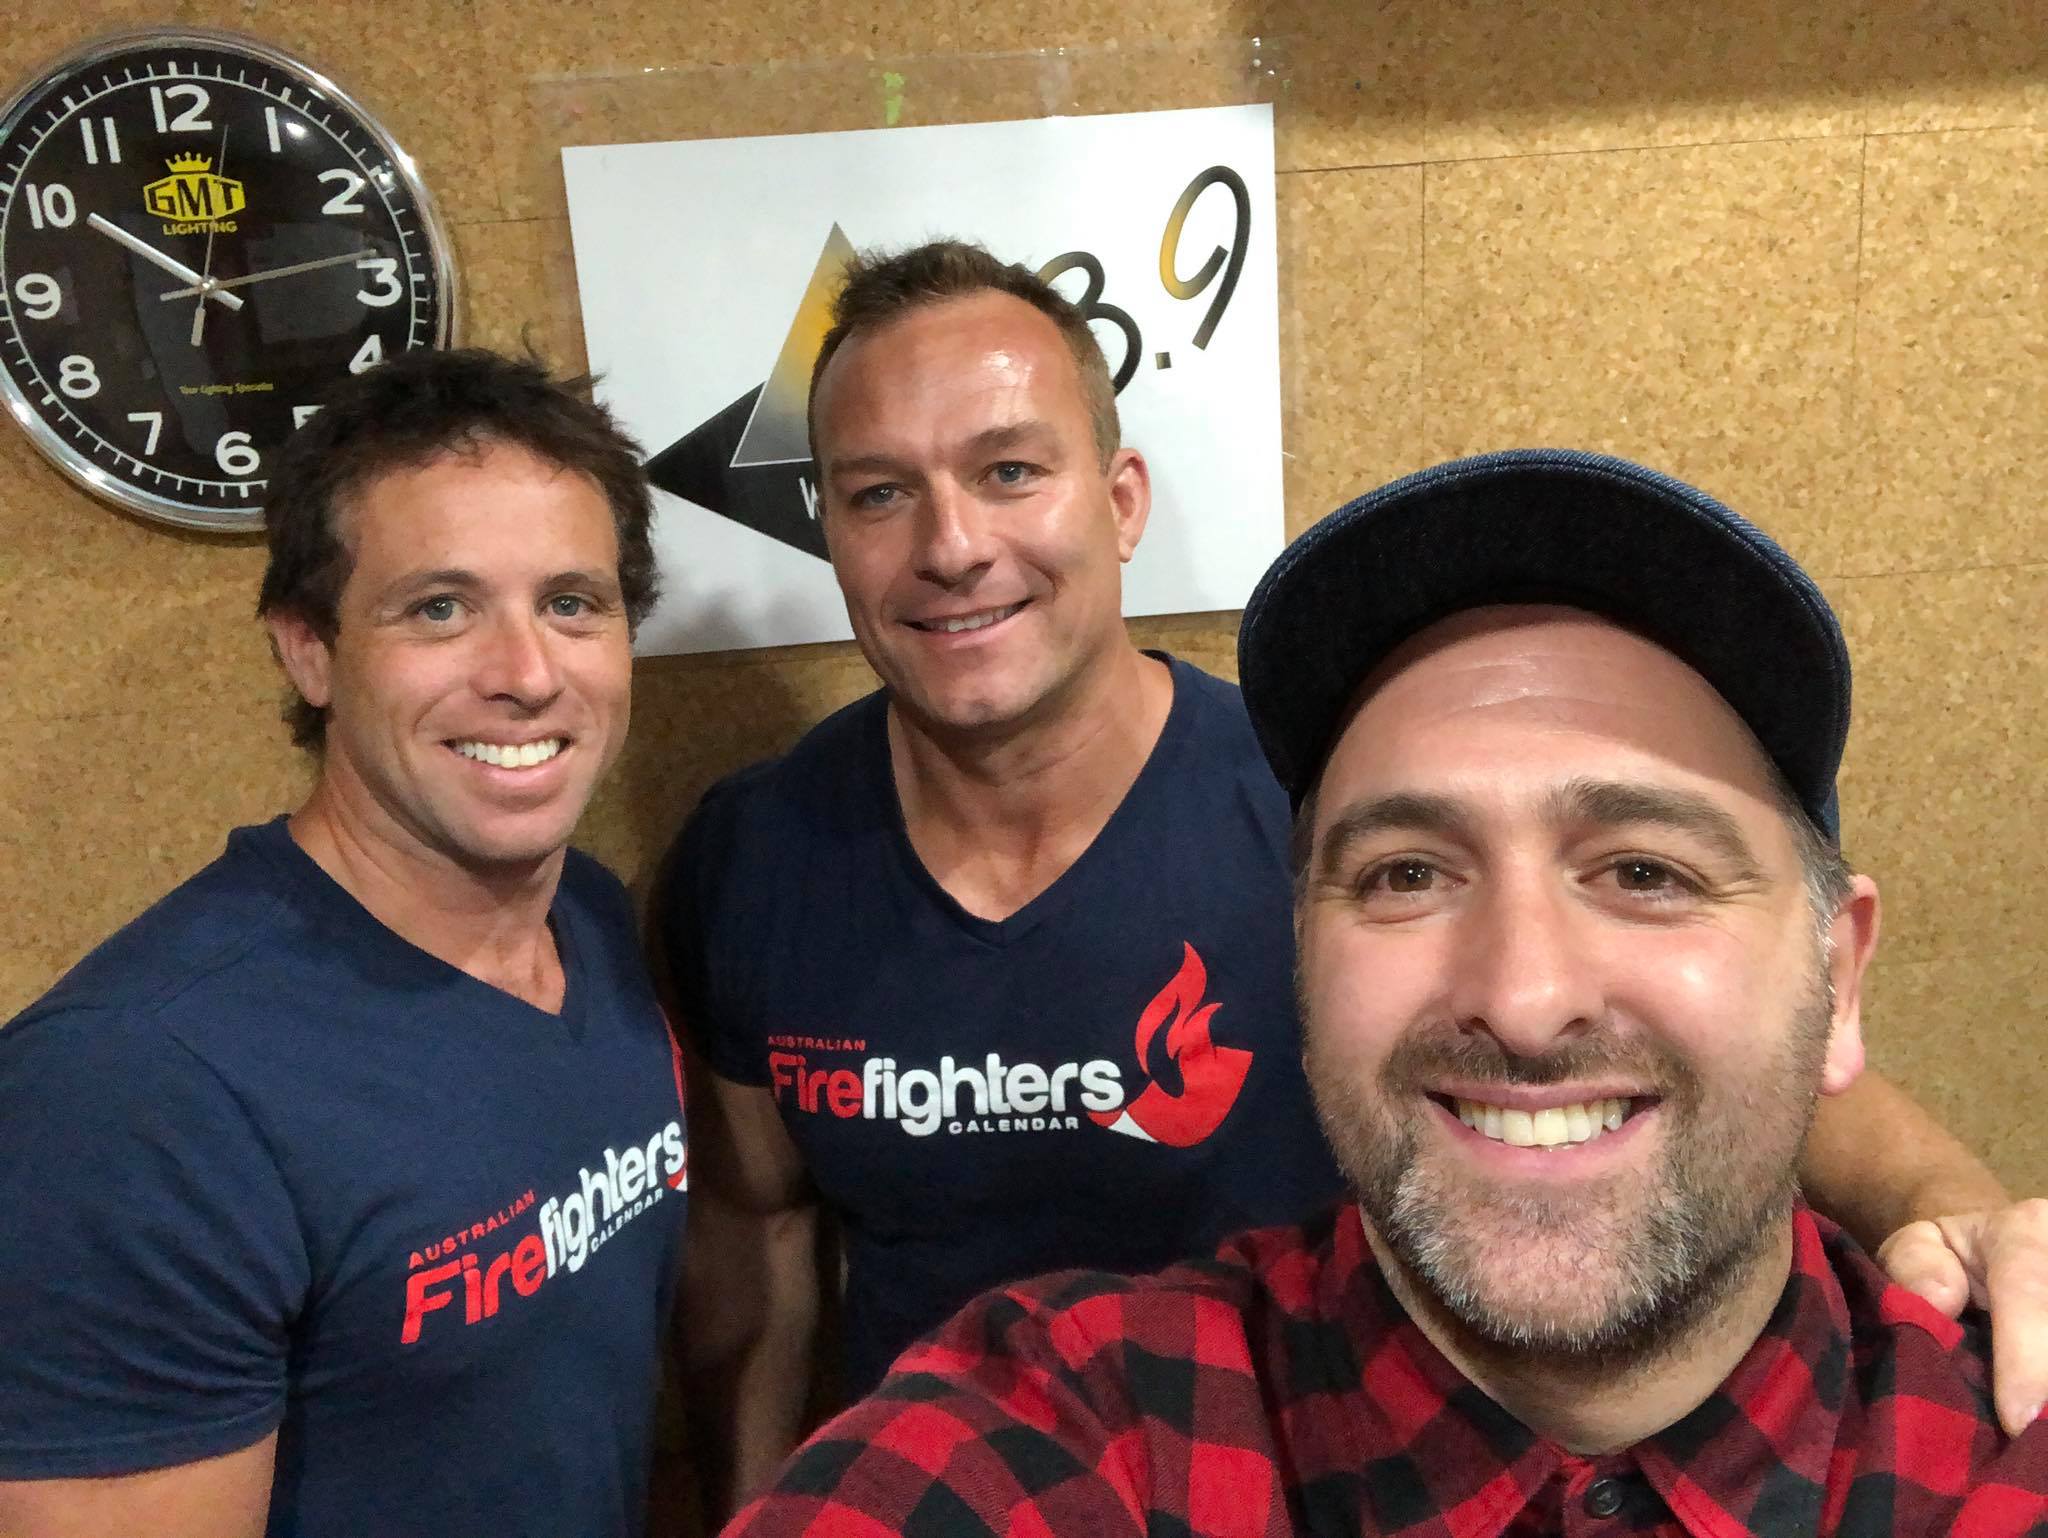 On Air with Brian Peel: Australian Firefighters Calendar (David & Simon) and Chris Williams